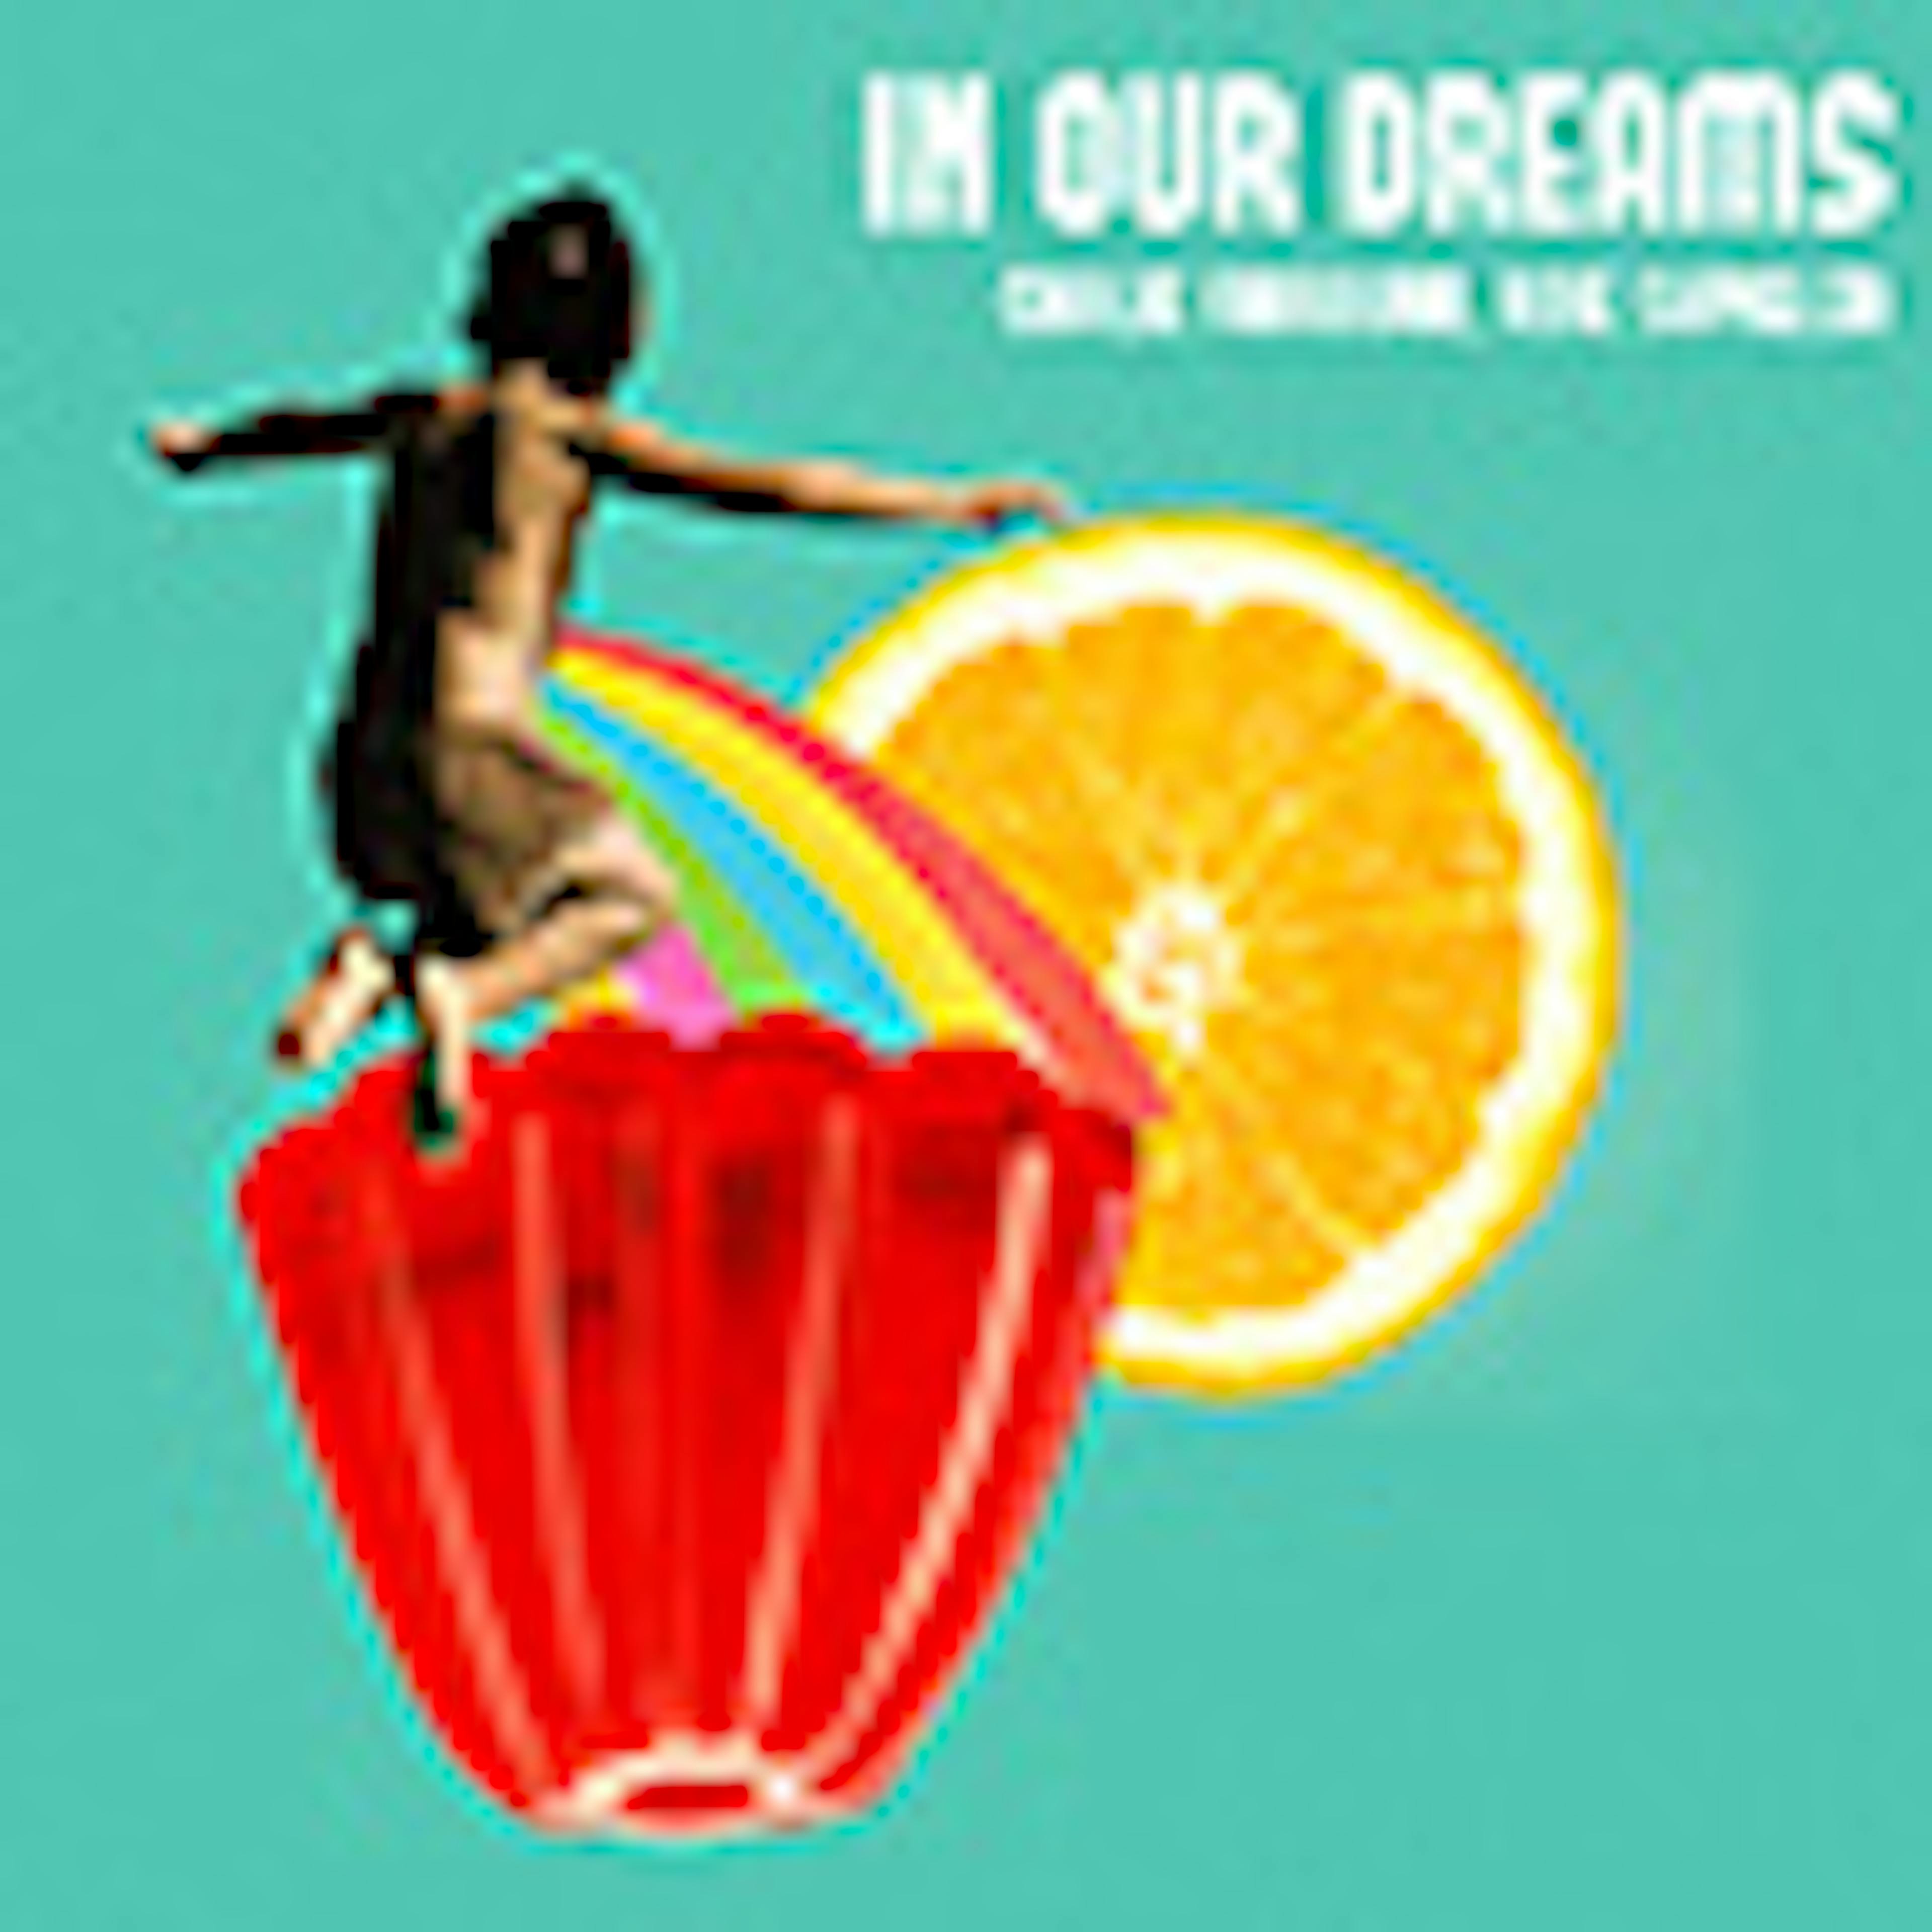 In Our Dreams album cover